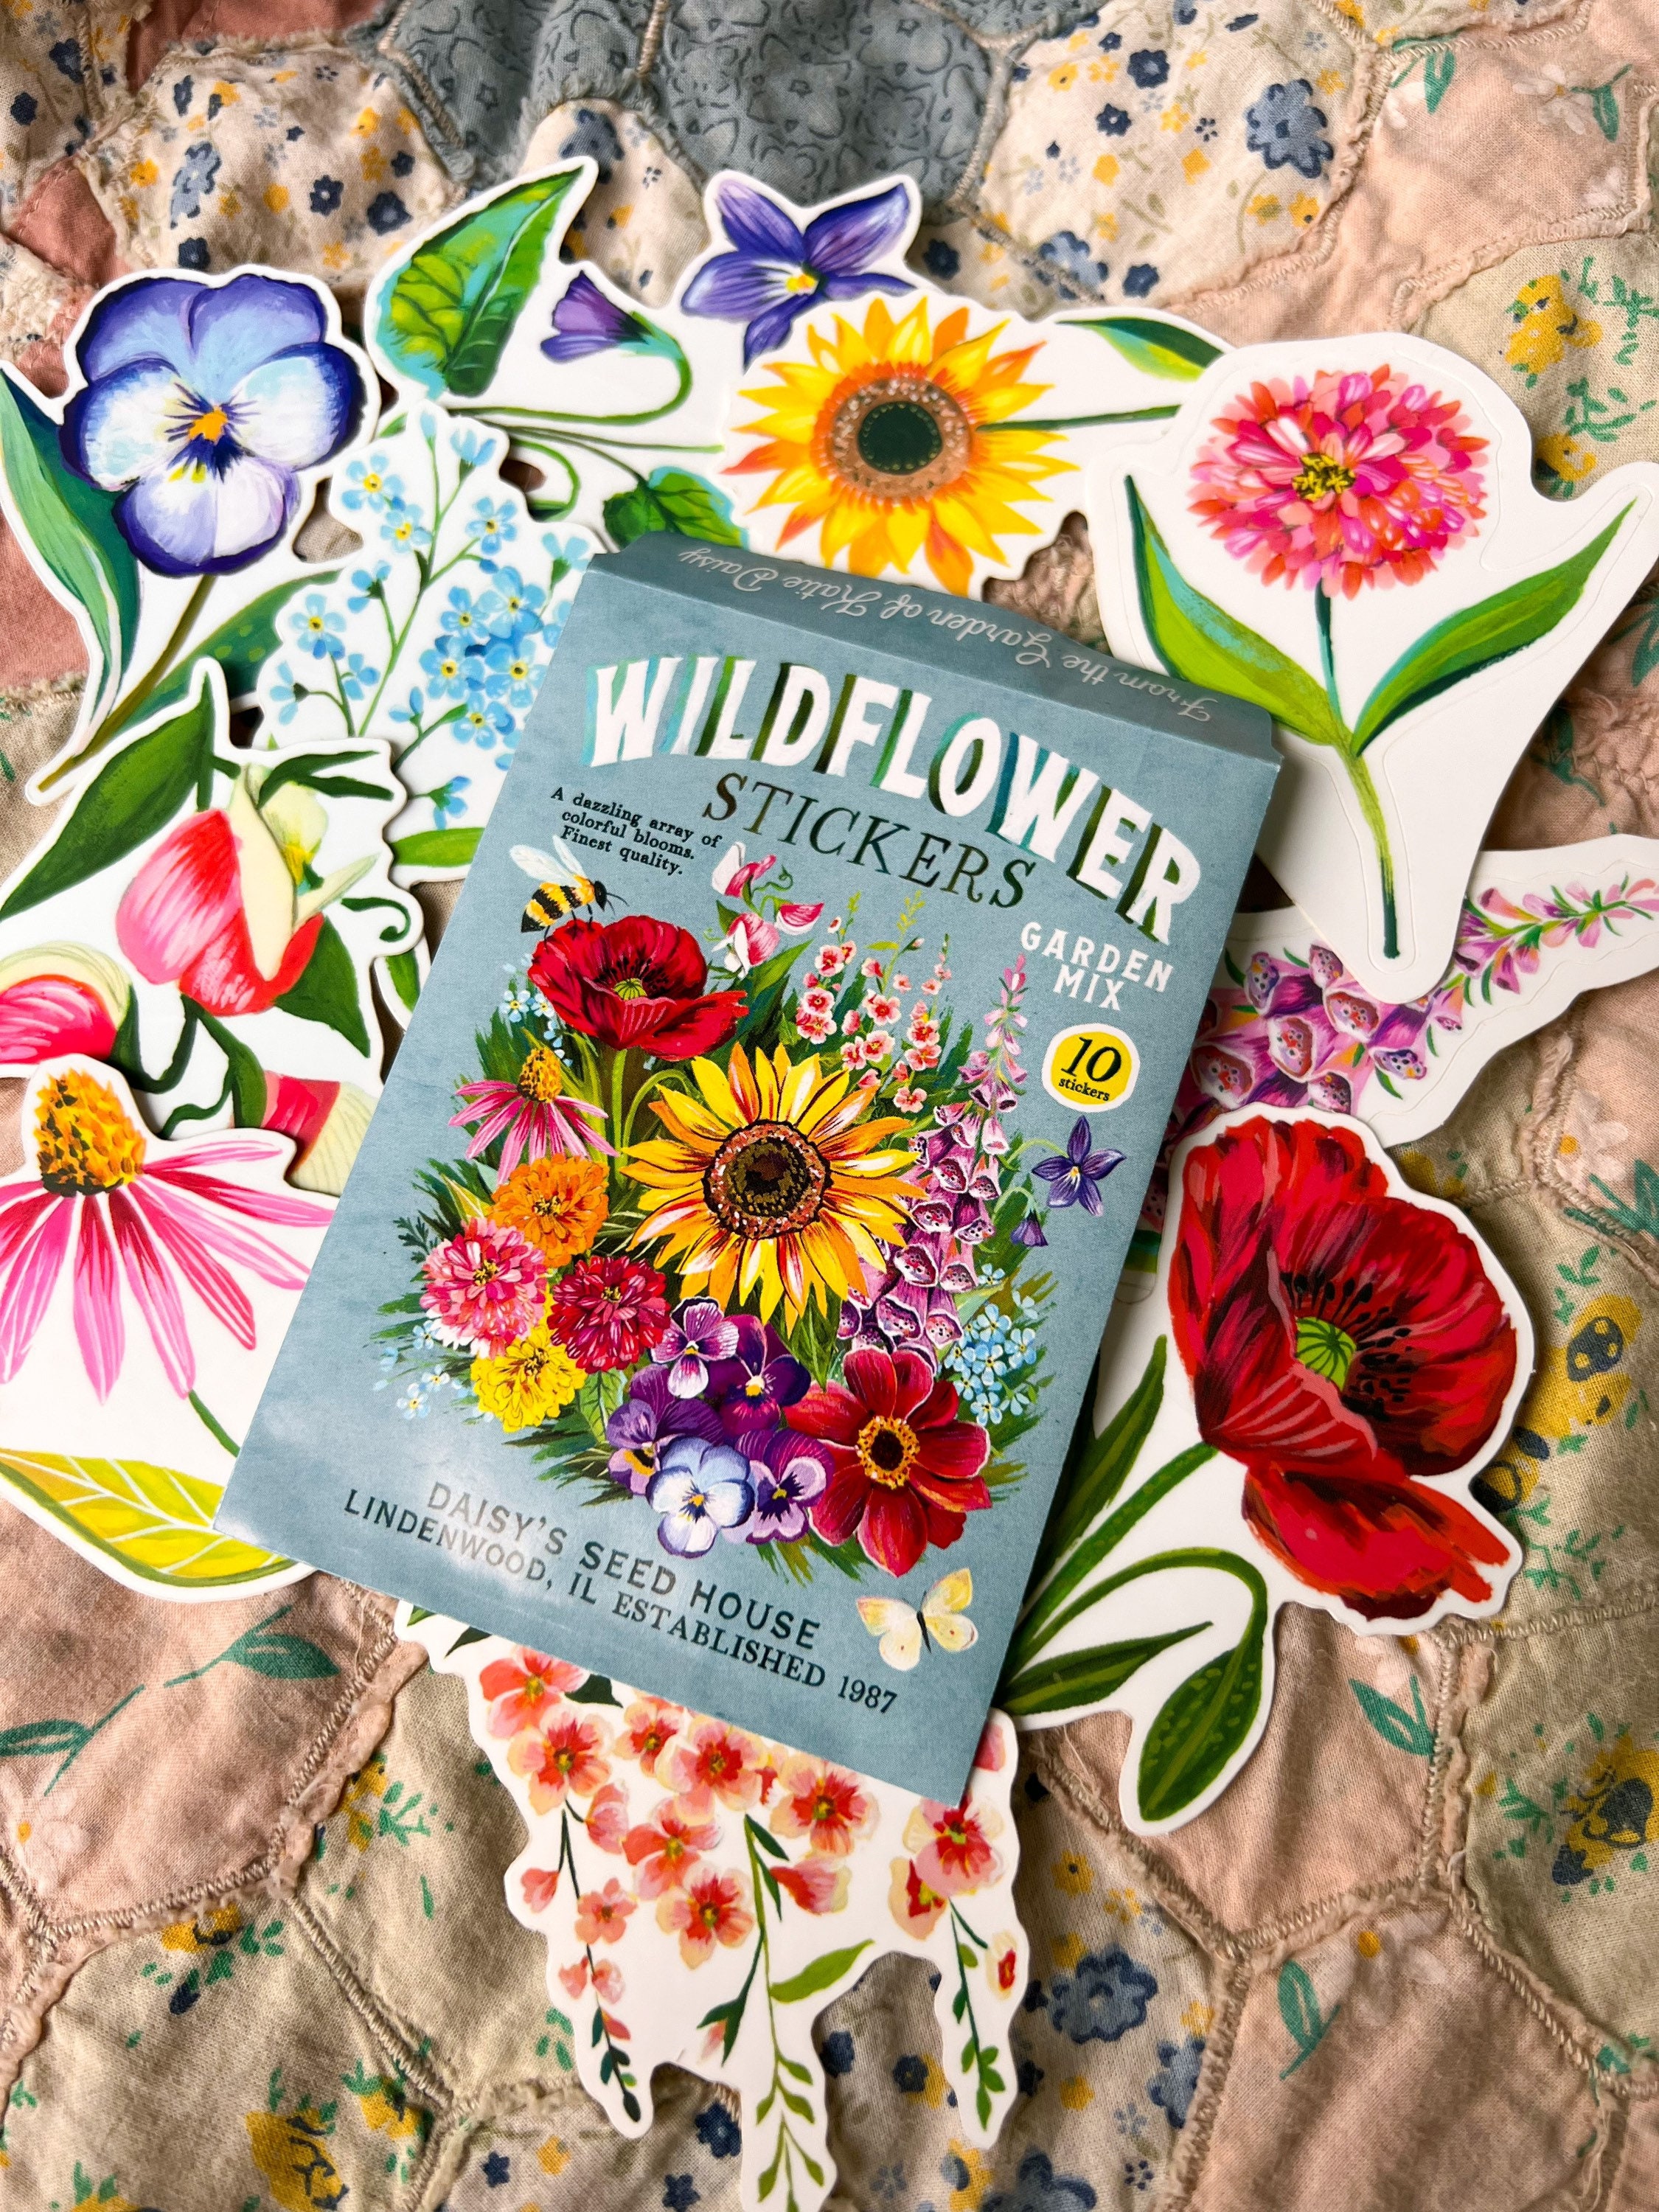 Wildflowers, Other, Wildflower Stickers